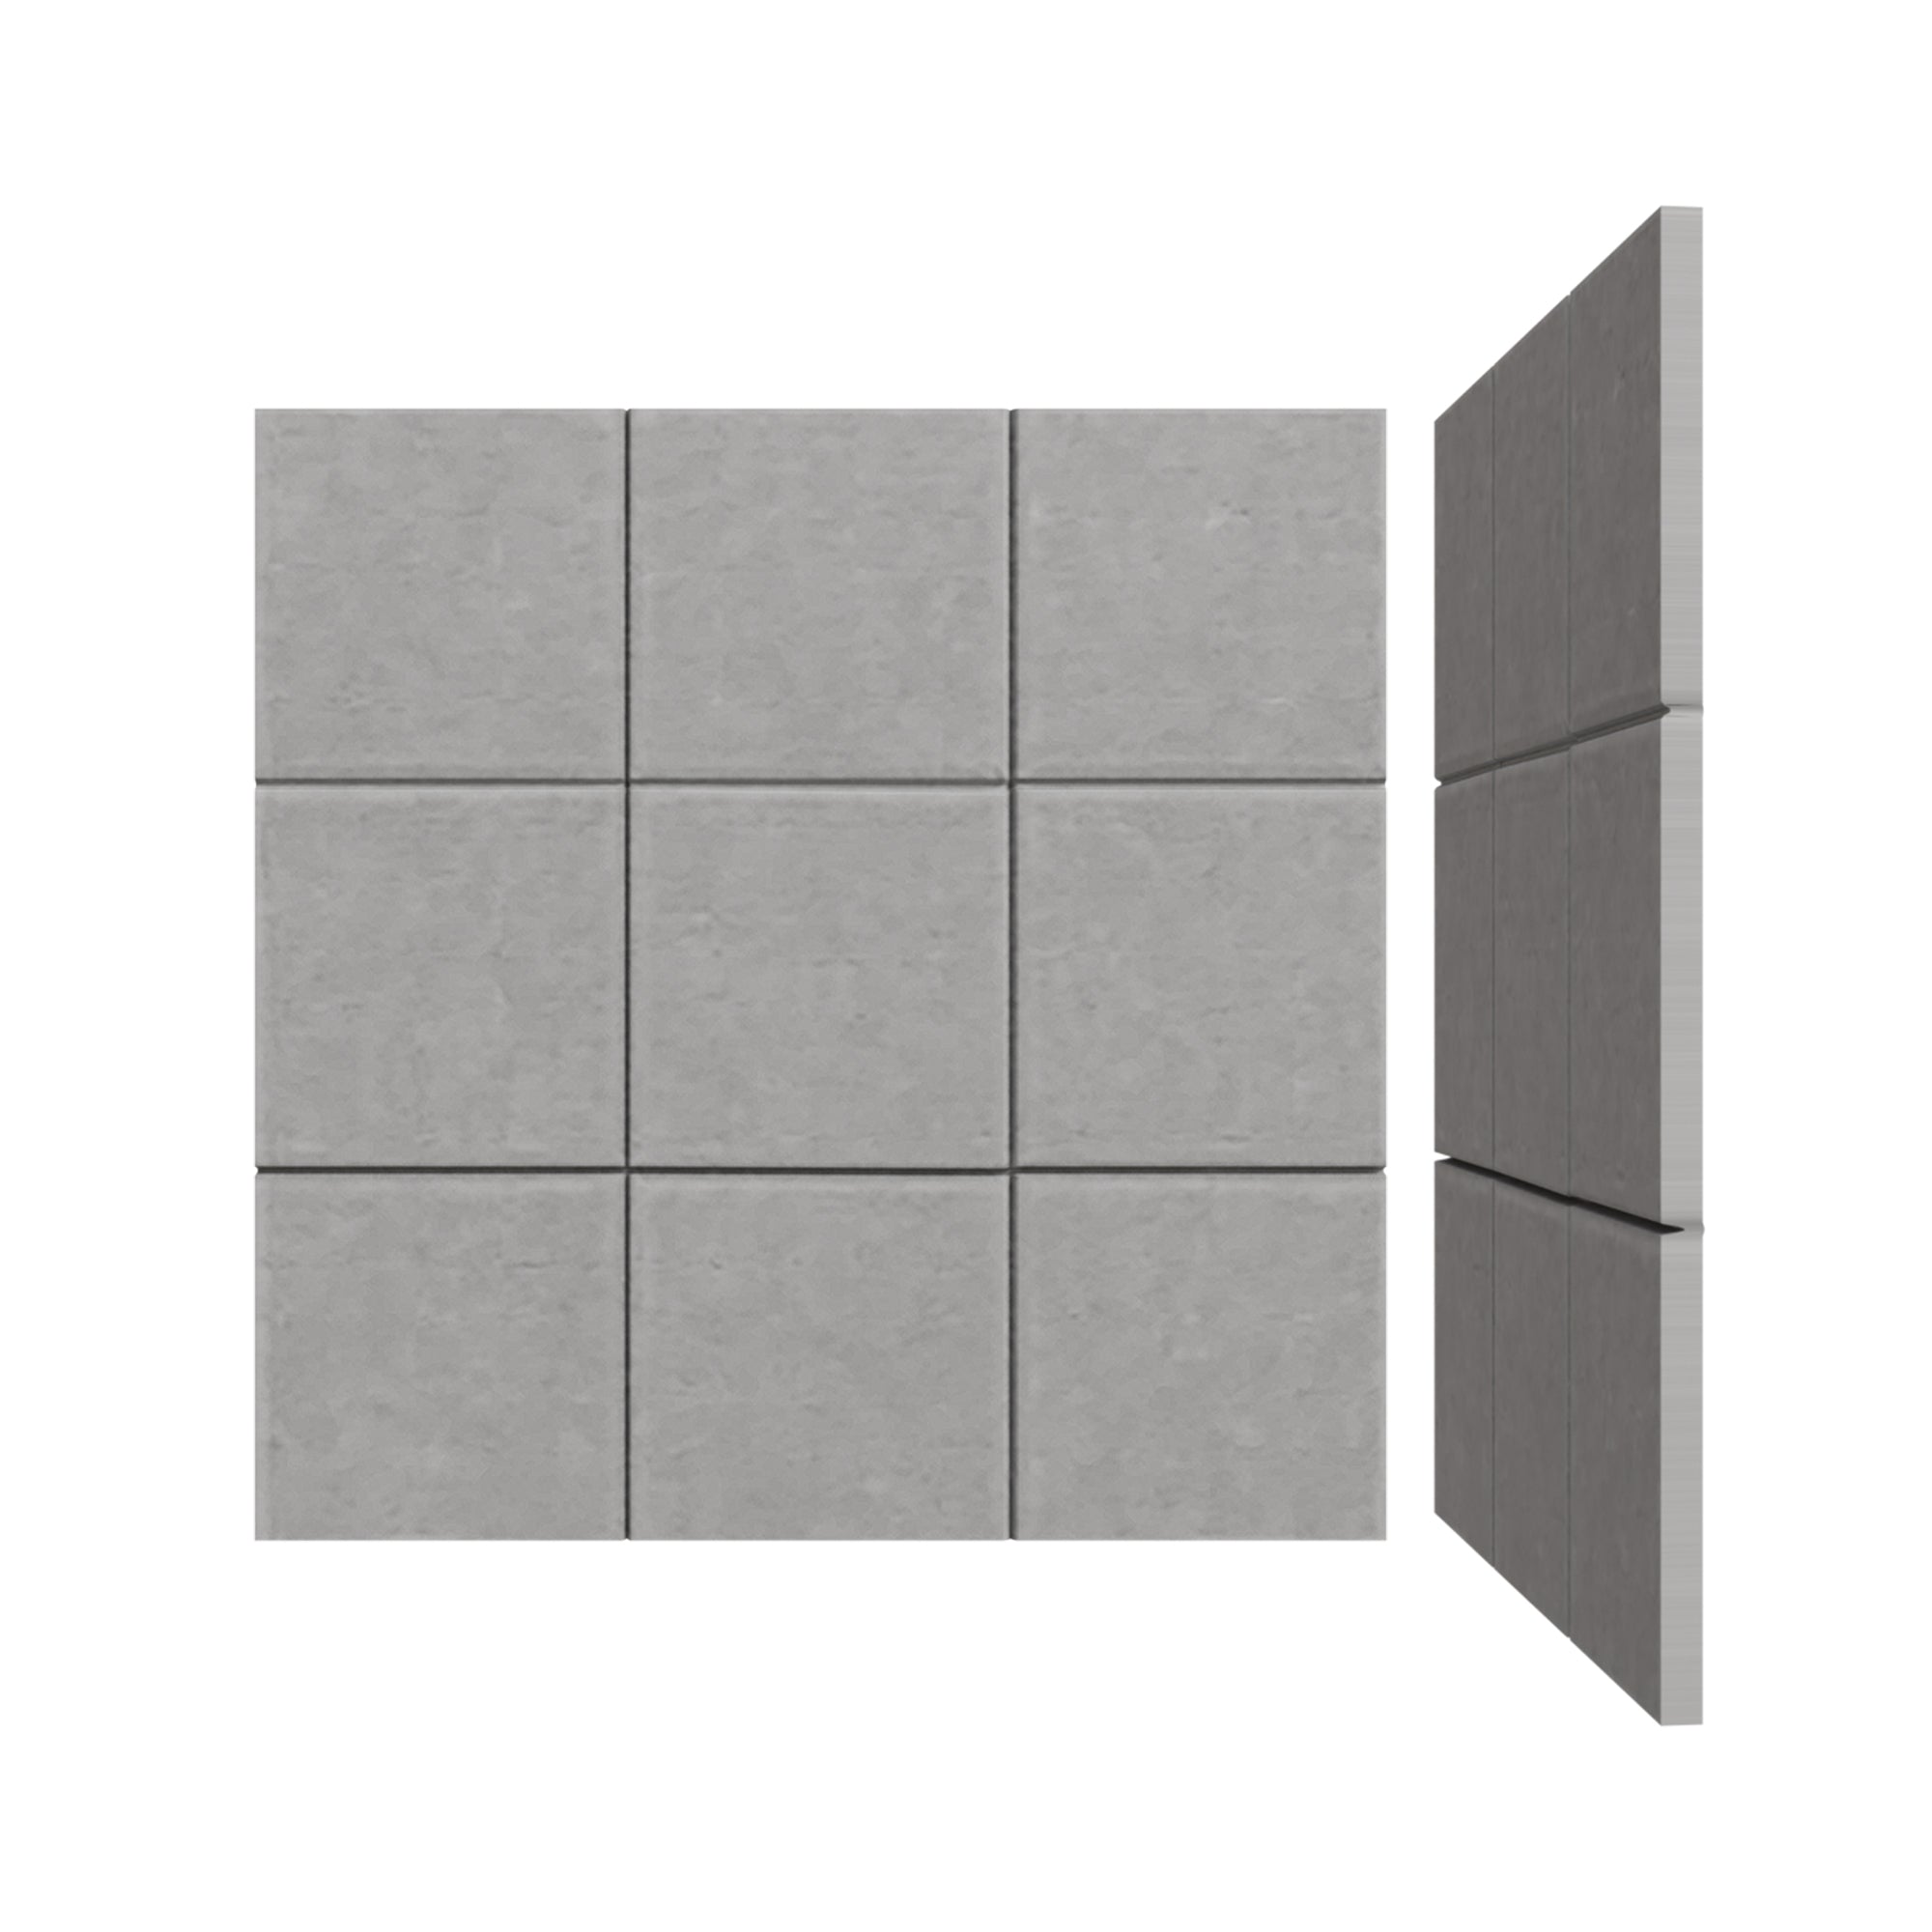 Arrowzoom Grid 3D Square Polyester Felt Art Adhesive Panels - KK1389